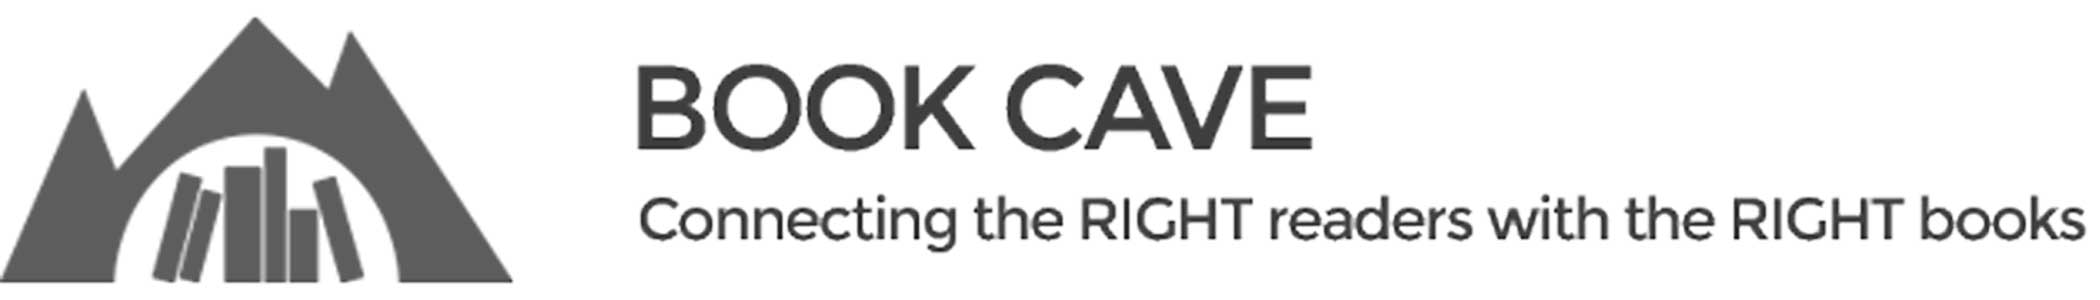 https://mybookcave.com/app/uploads/2021/03/bookcave-logo-1.jpg